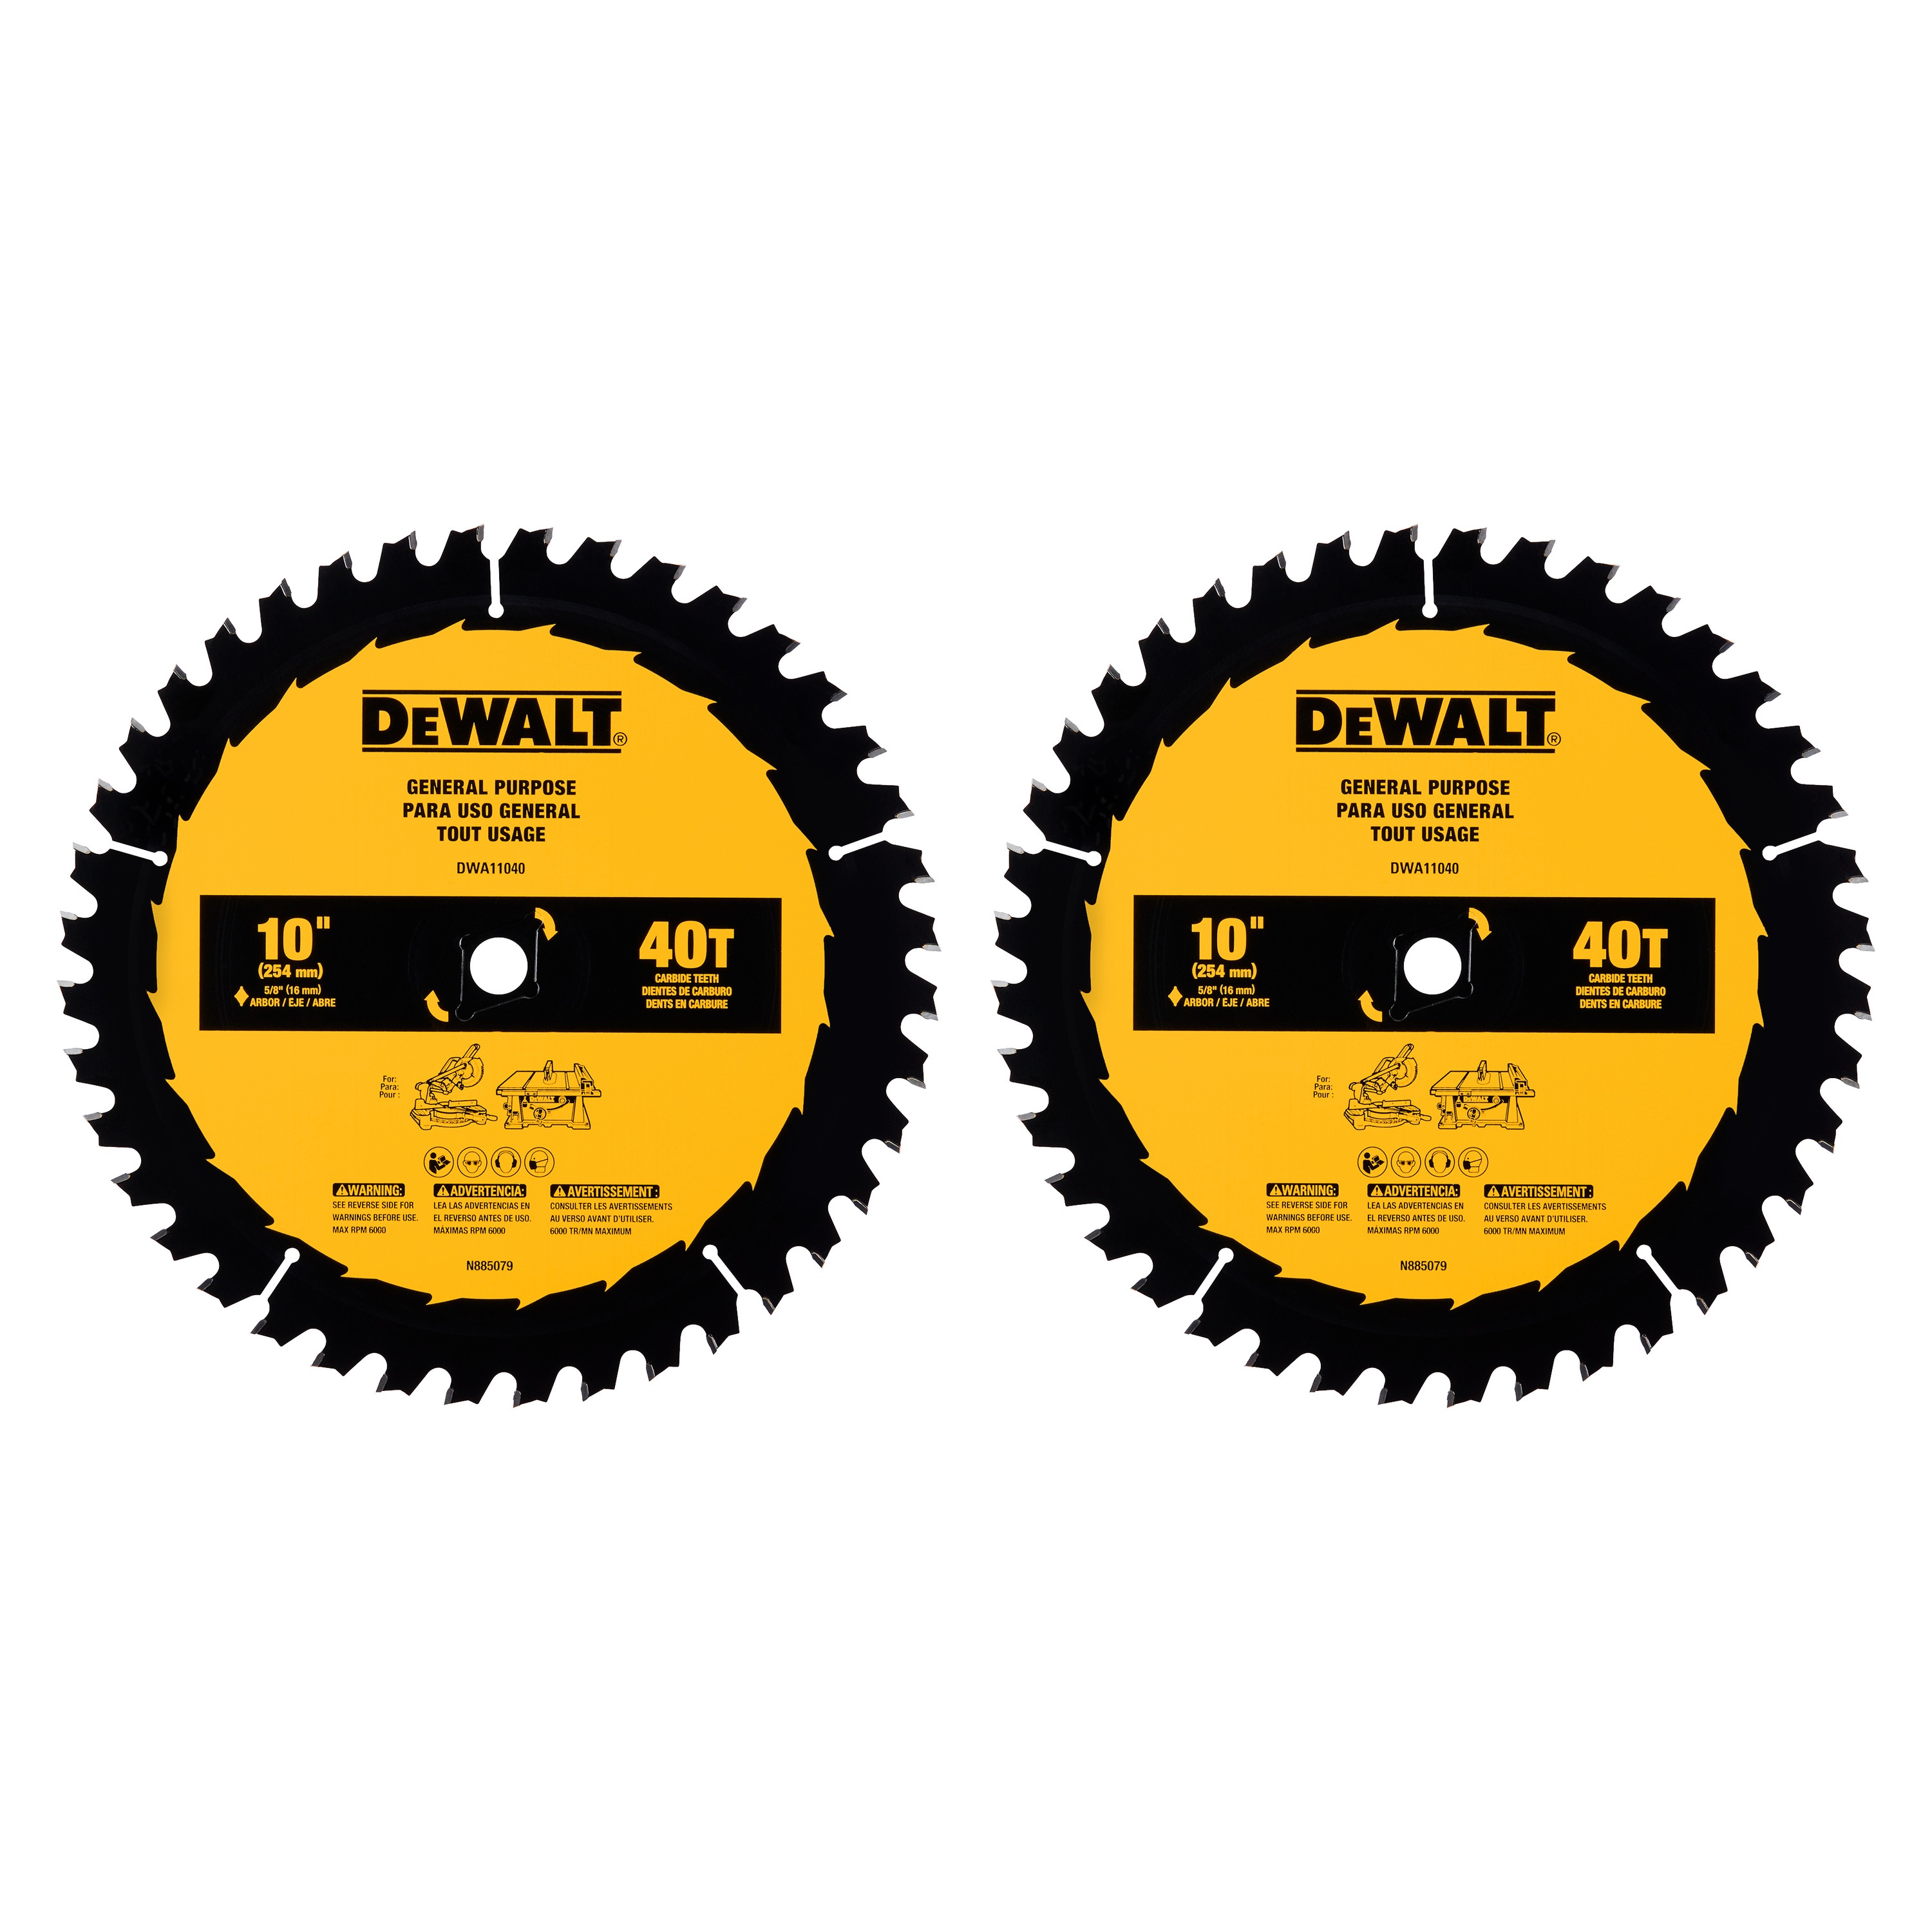 DEWALT - 10 in 40  40T General Purpose Combo Pack - DWA1040CMB